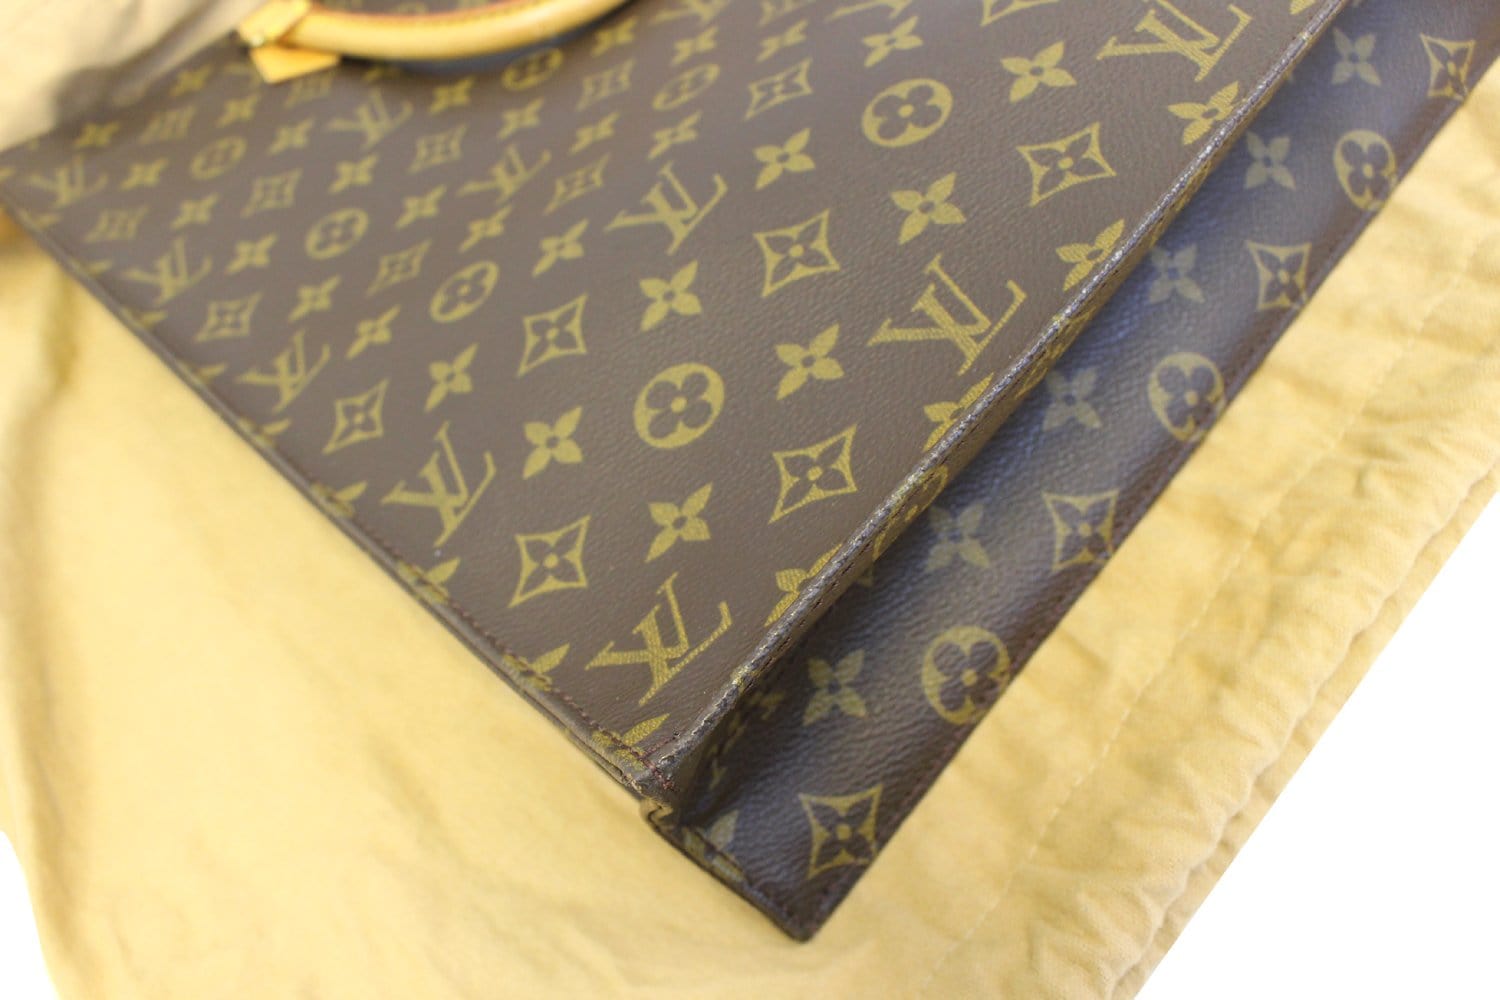 Used Brown Louis Vuitton Authentic Sac Plat Top Handle Tote Bag Monogram  Canvas Houston,TX